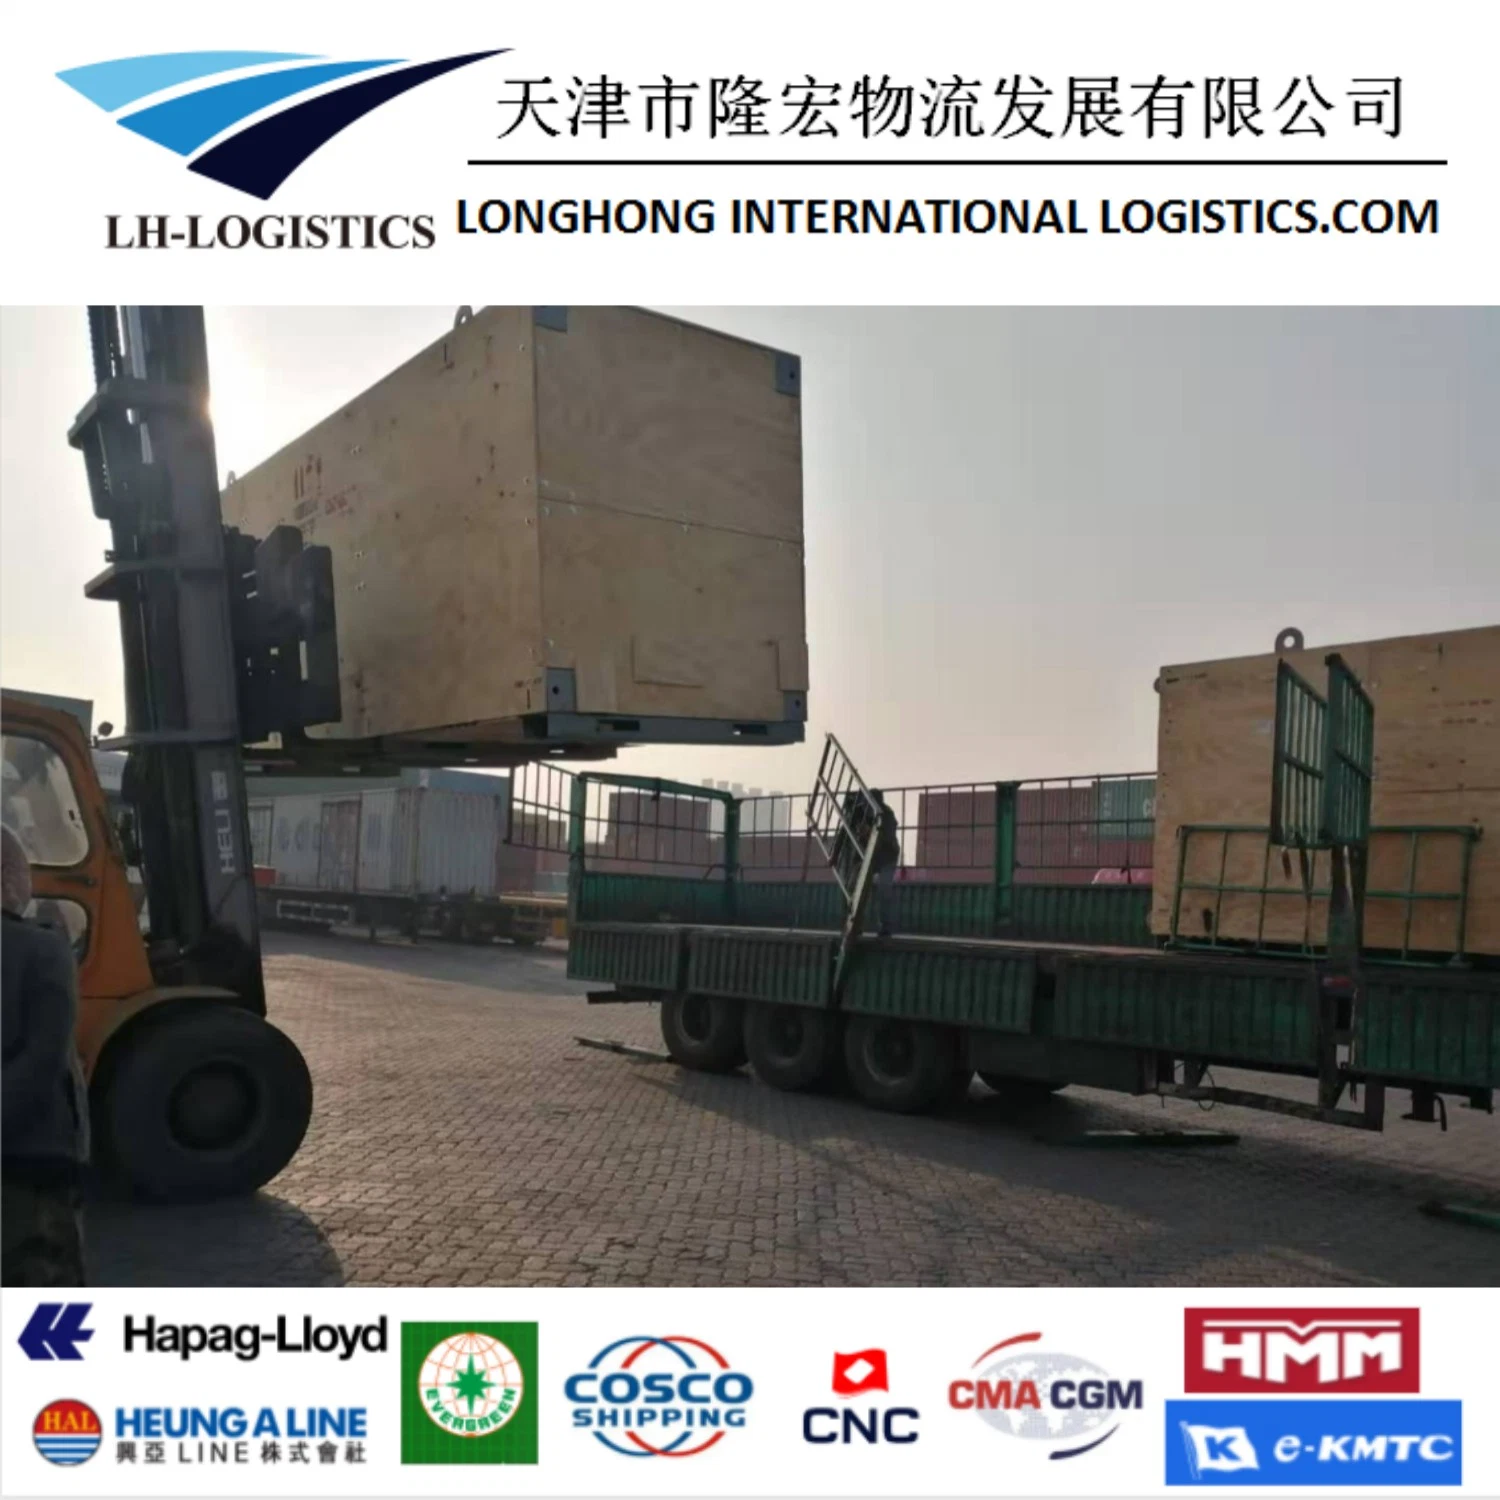 Customs Clearance for International Shipments Custom Clearance /Warehouse in China Shipping 1688